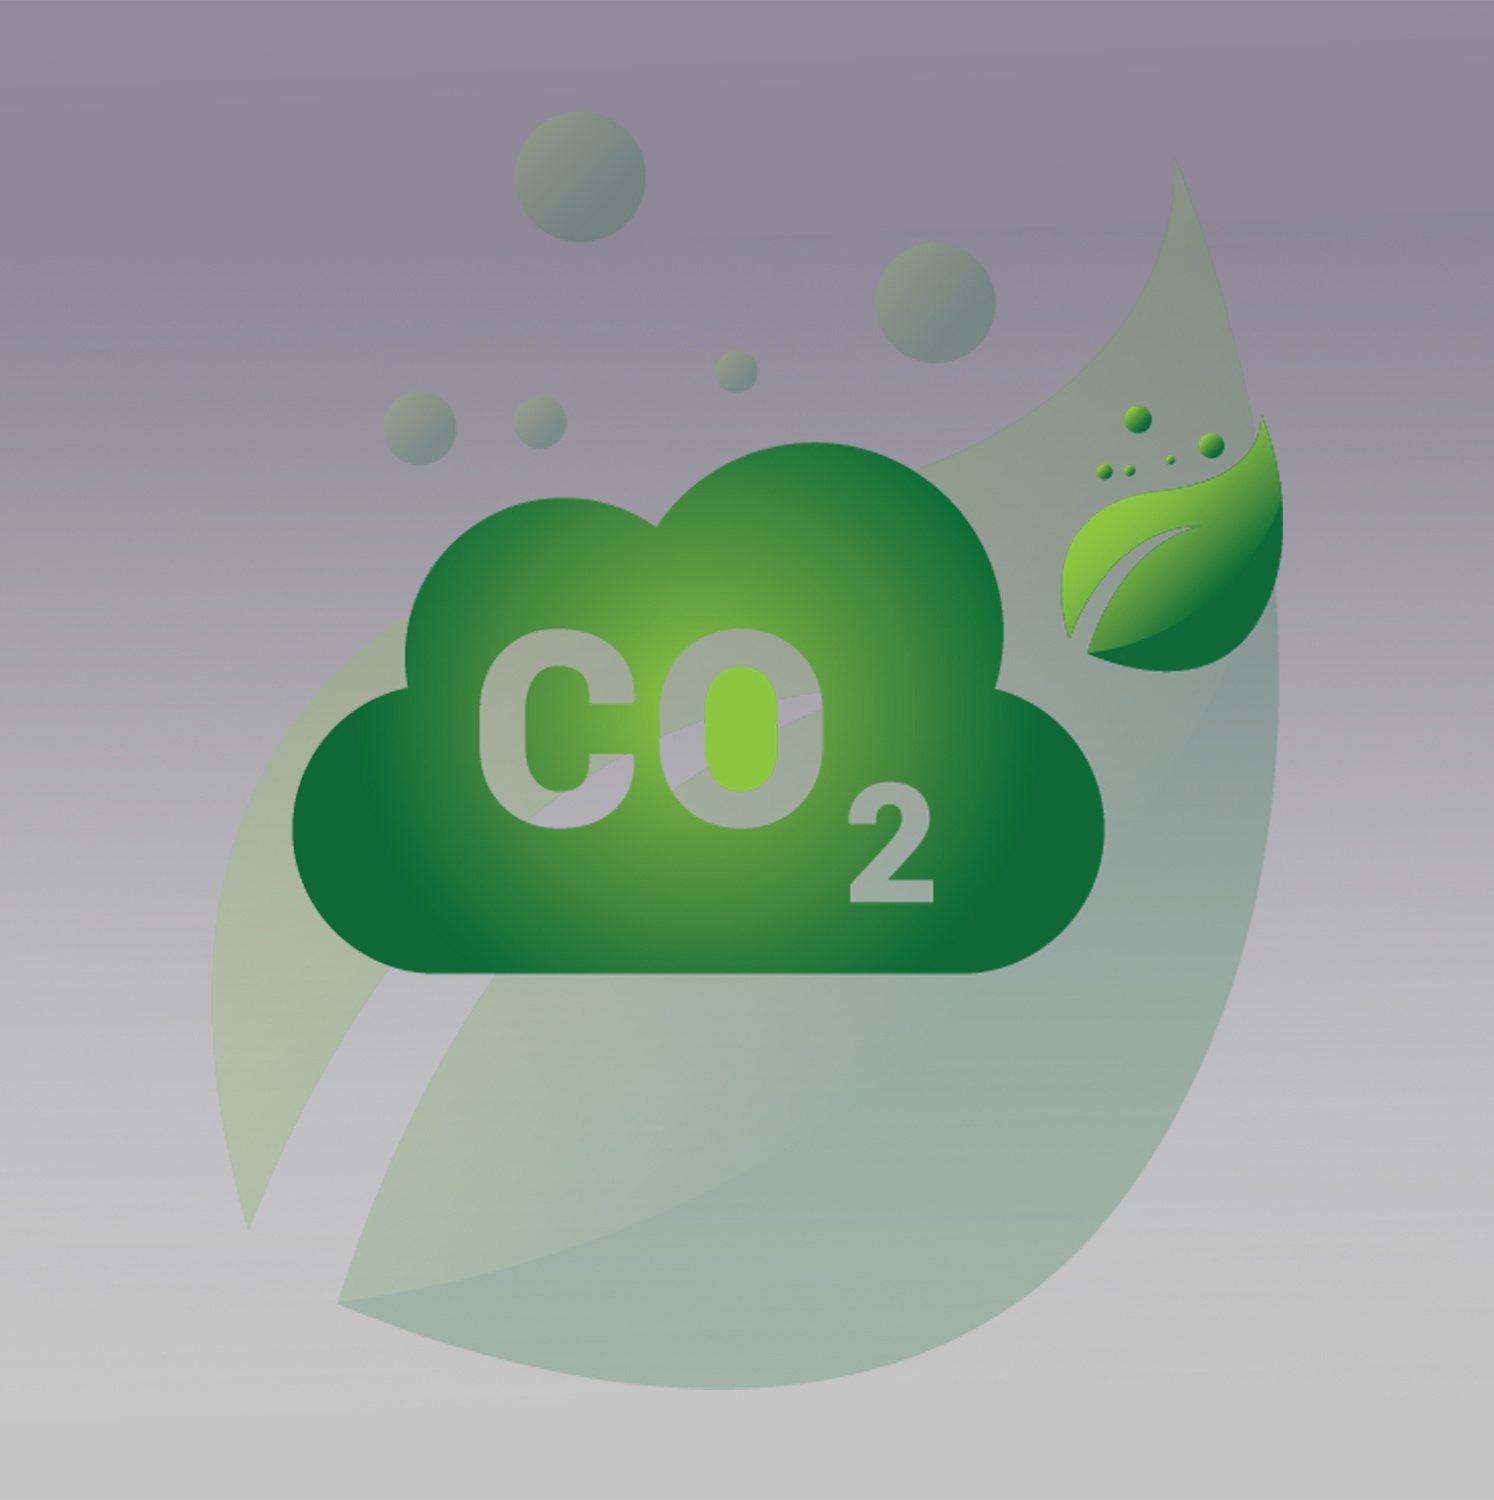 CO2 refrigeration